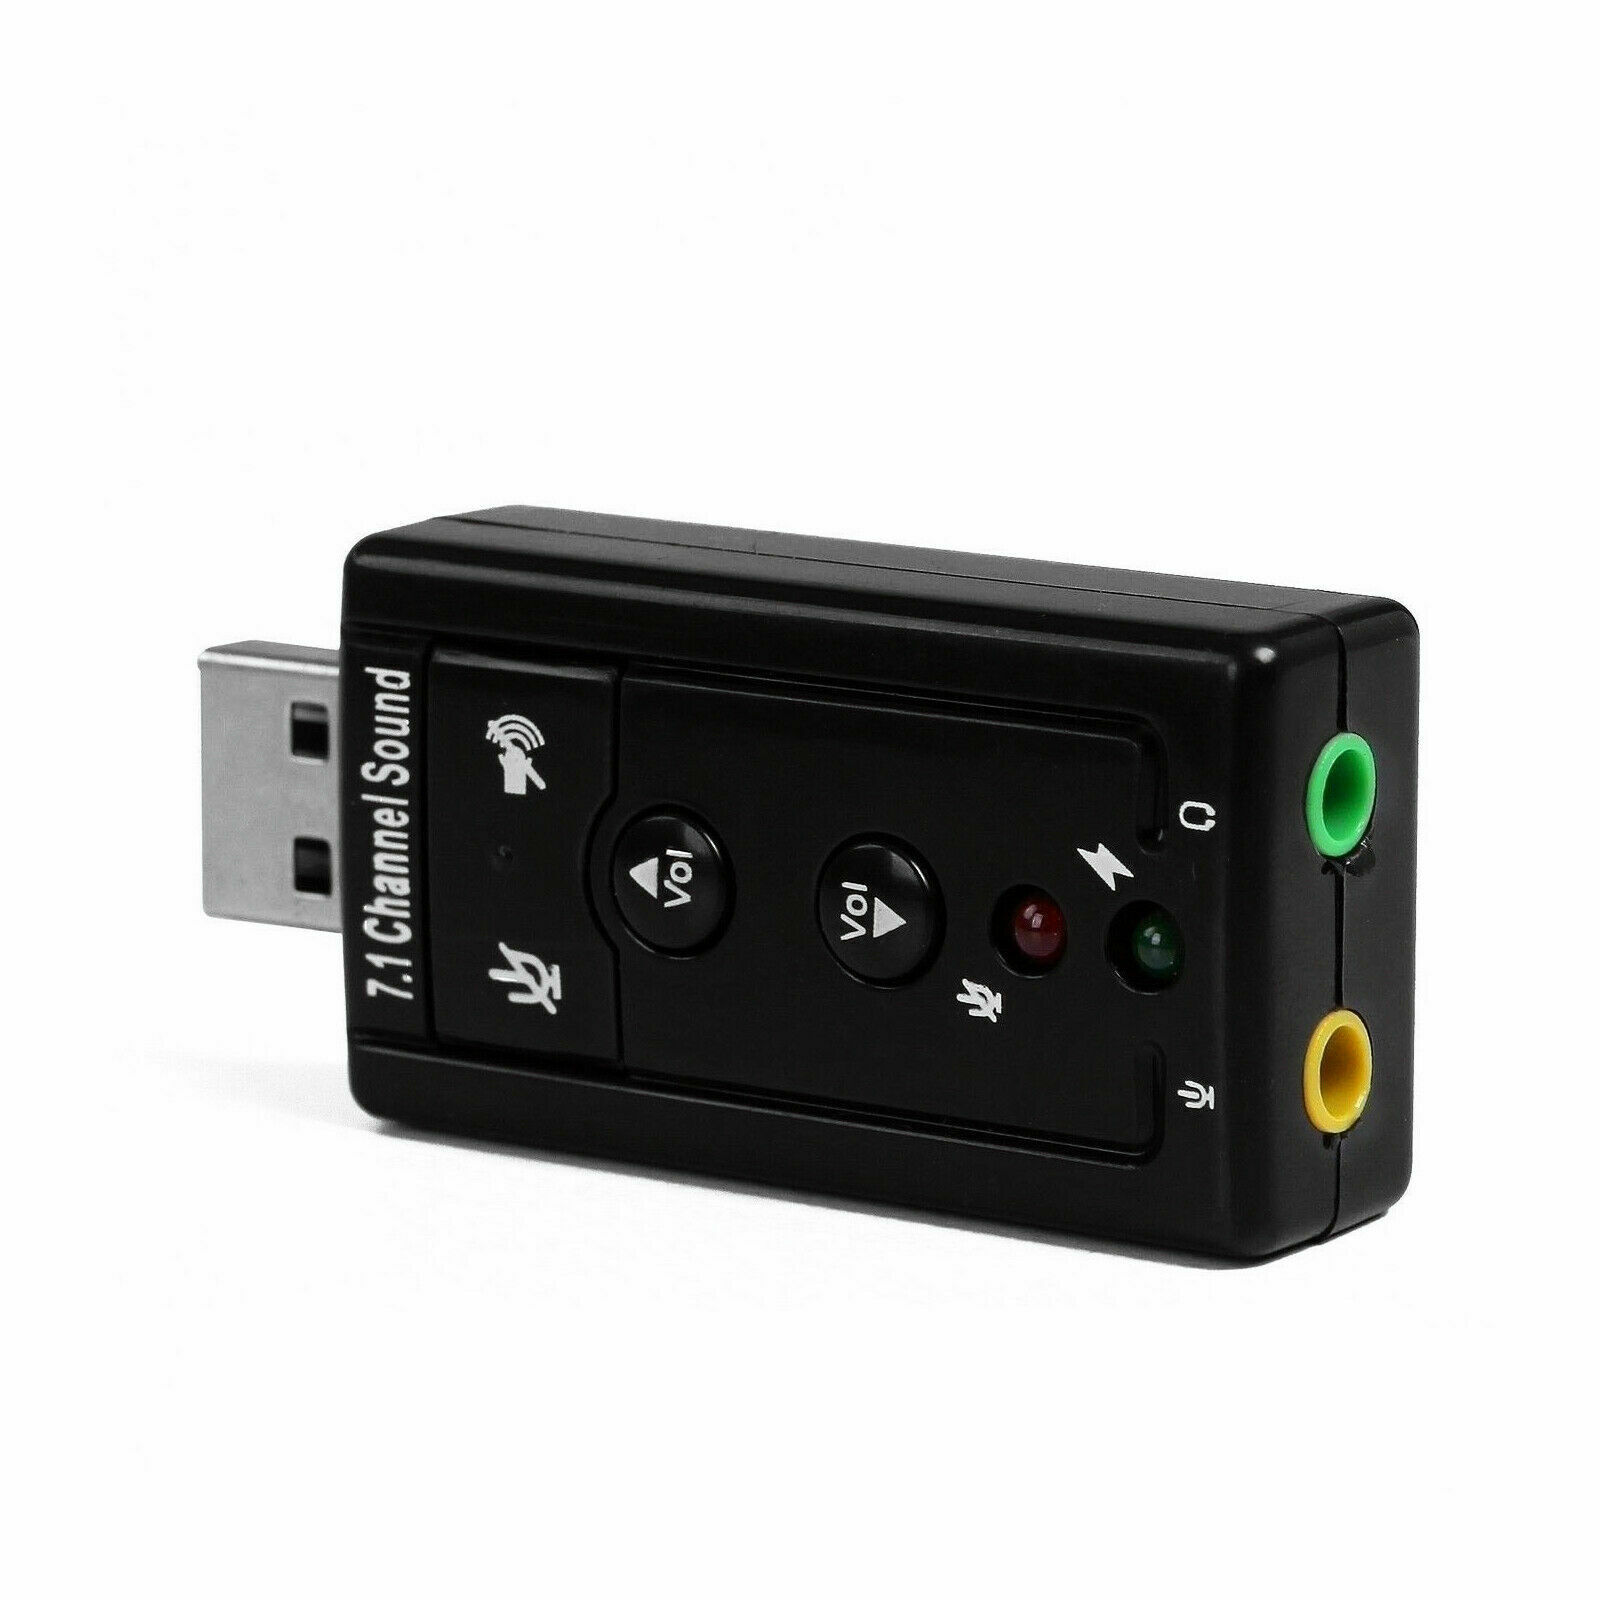 Usb 2.0 External 7.1 Channel 3d Virtual Audio Sound Card Mic Adapter Laptop Pc